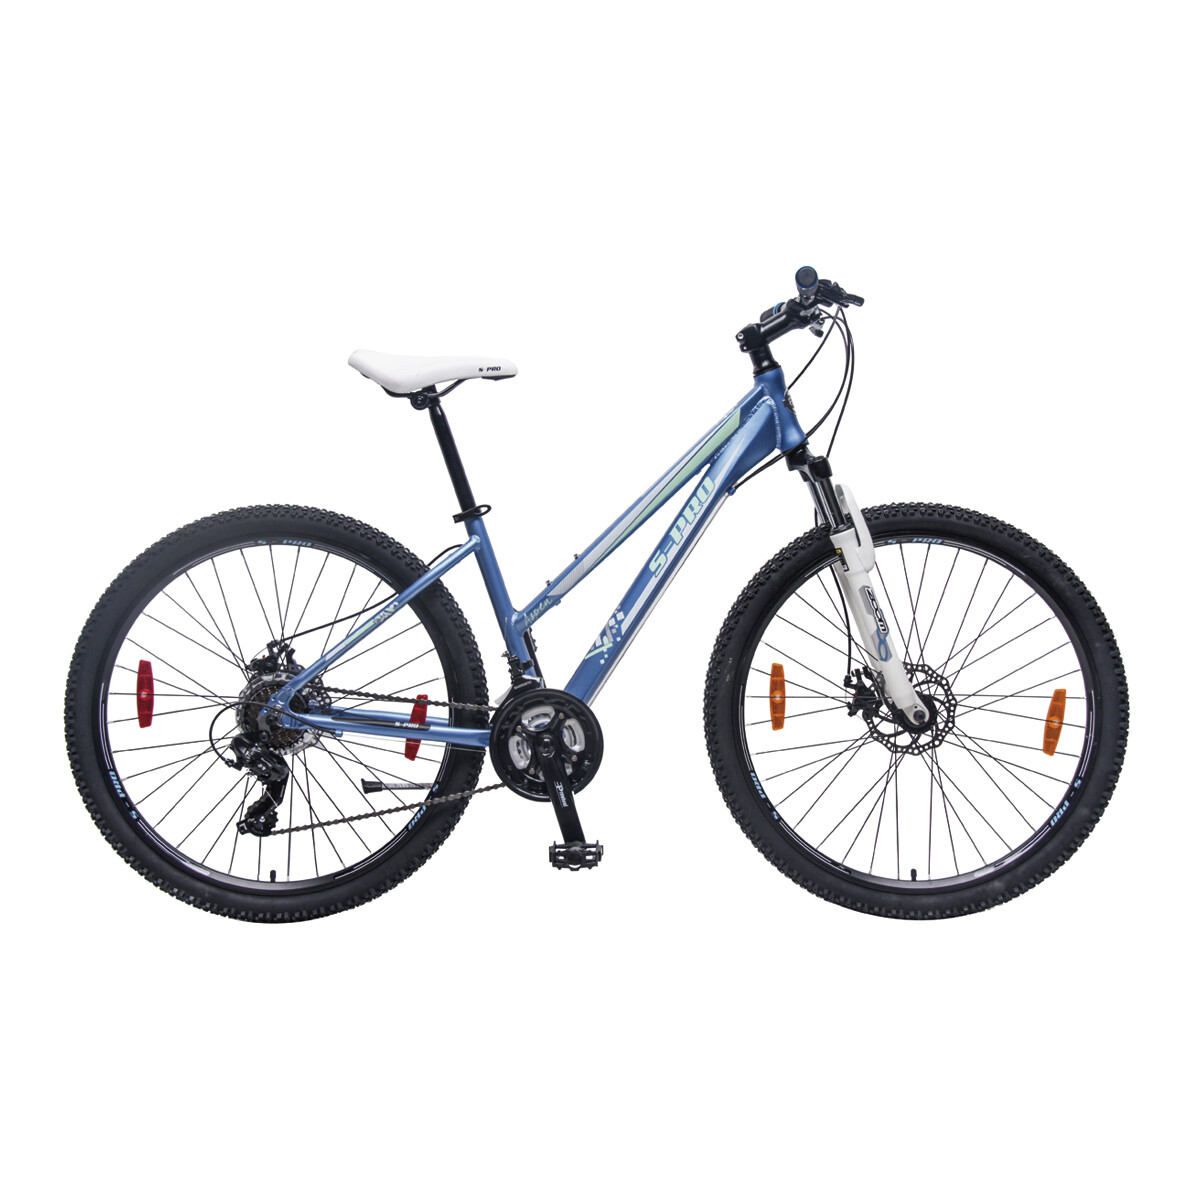 Bicicleta S-PRO Aspen R27.5 - Azul 